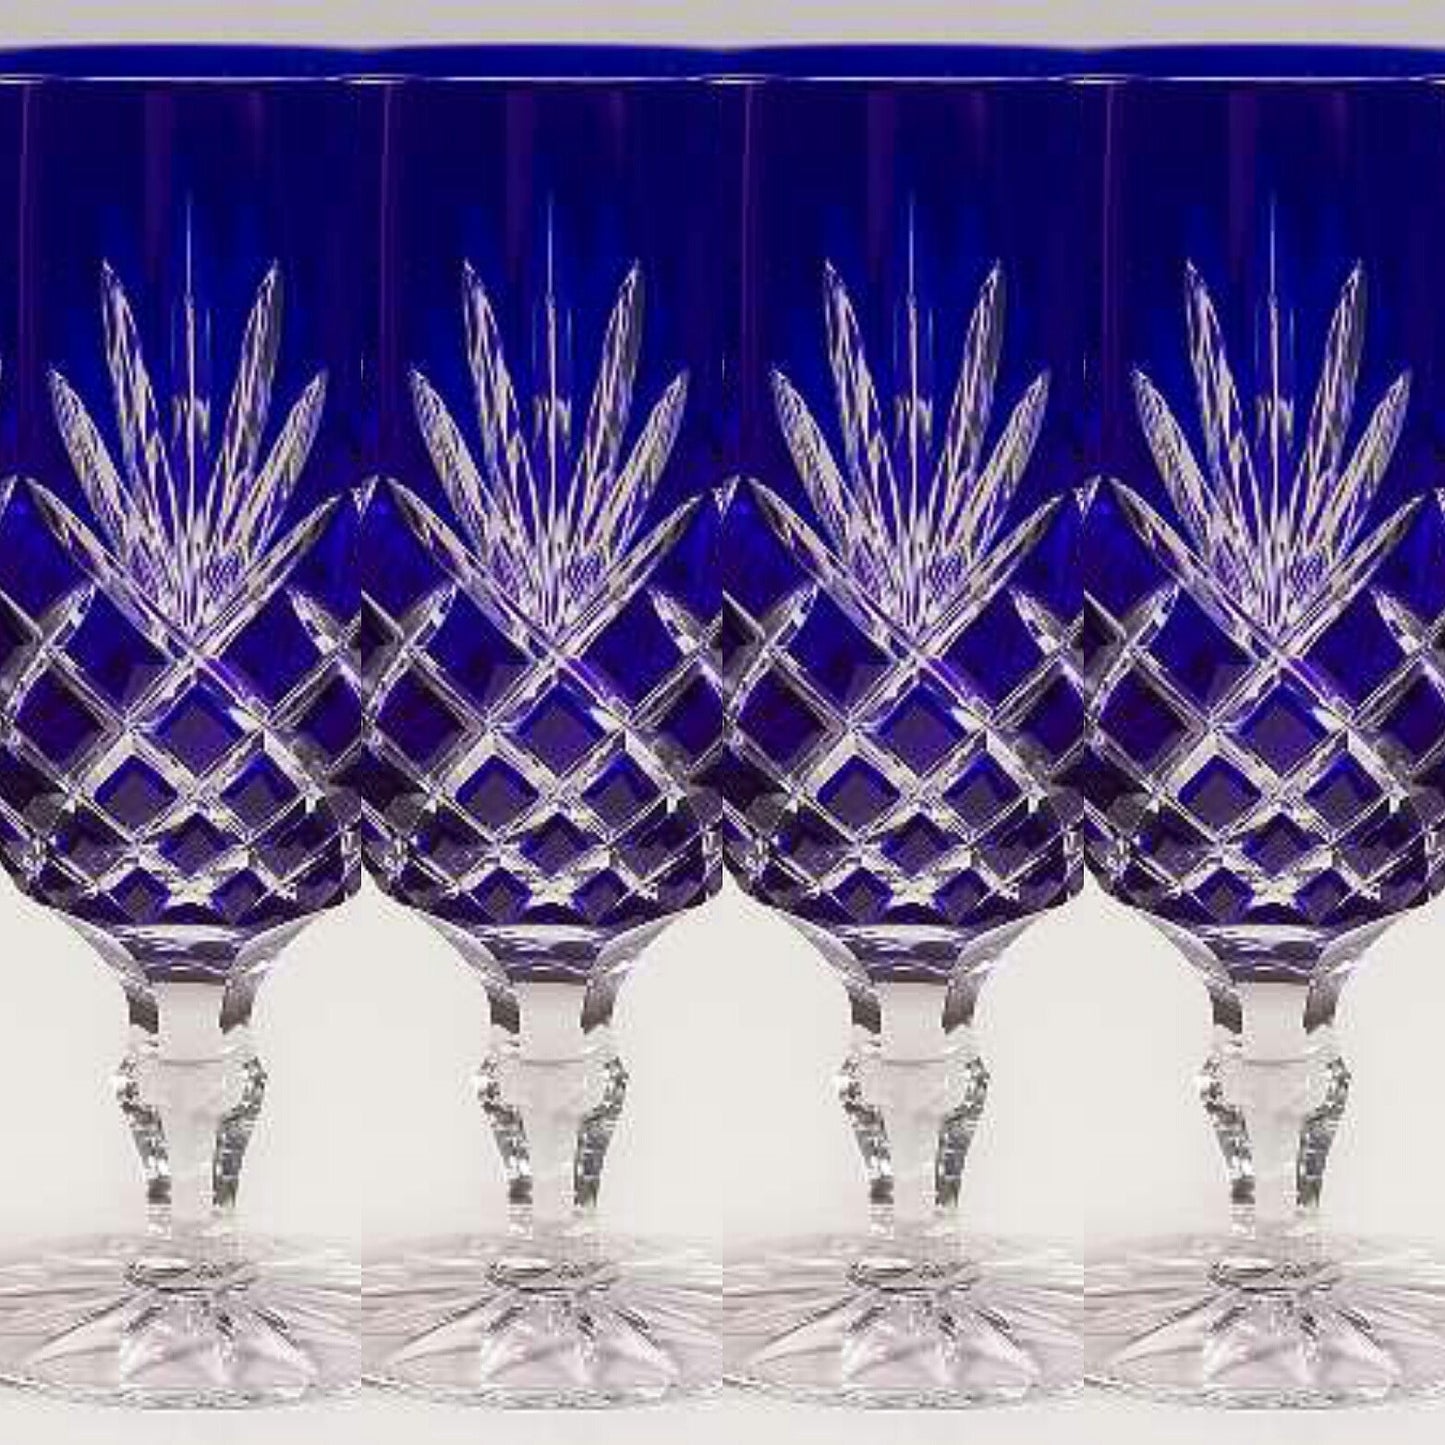 Faberge Odessa Crystal Glasses in Cobalt Blue